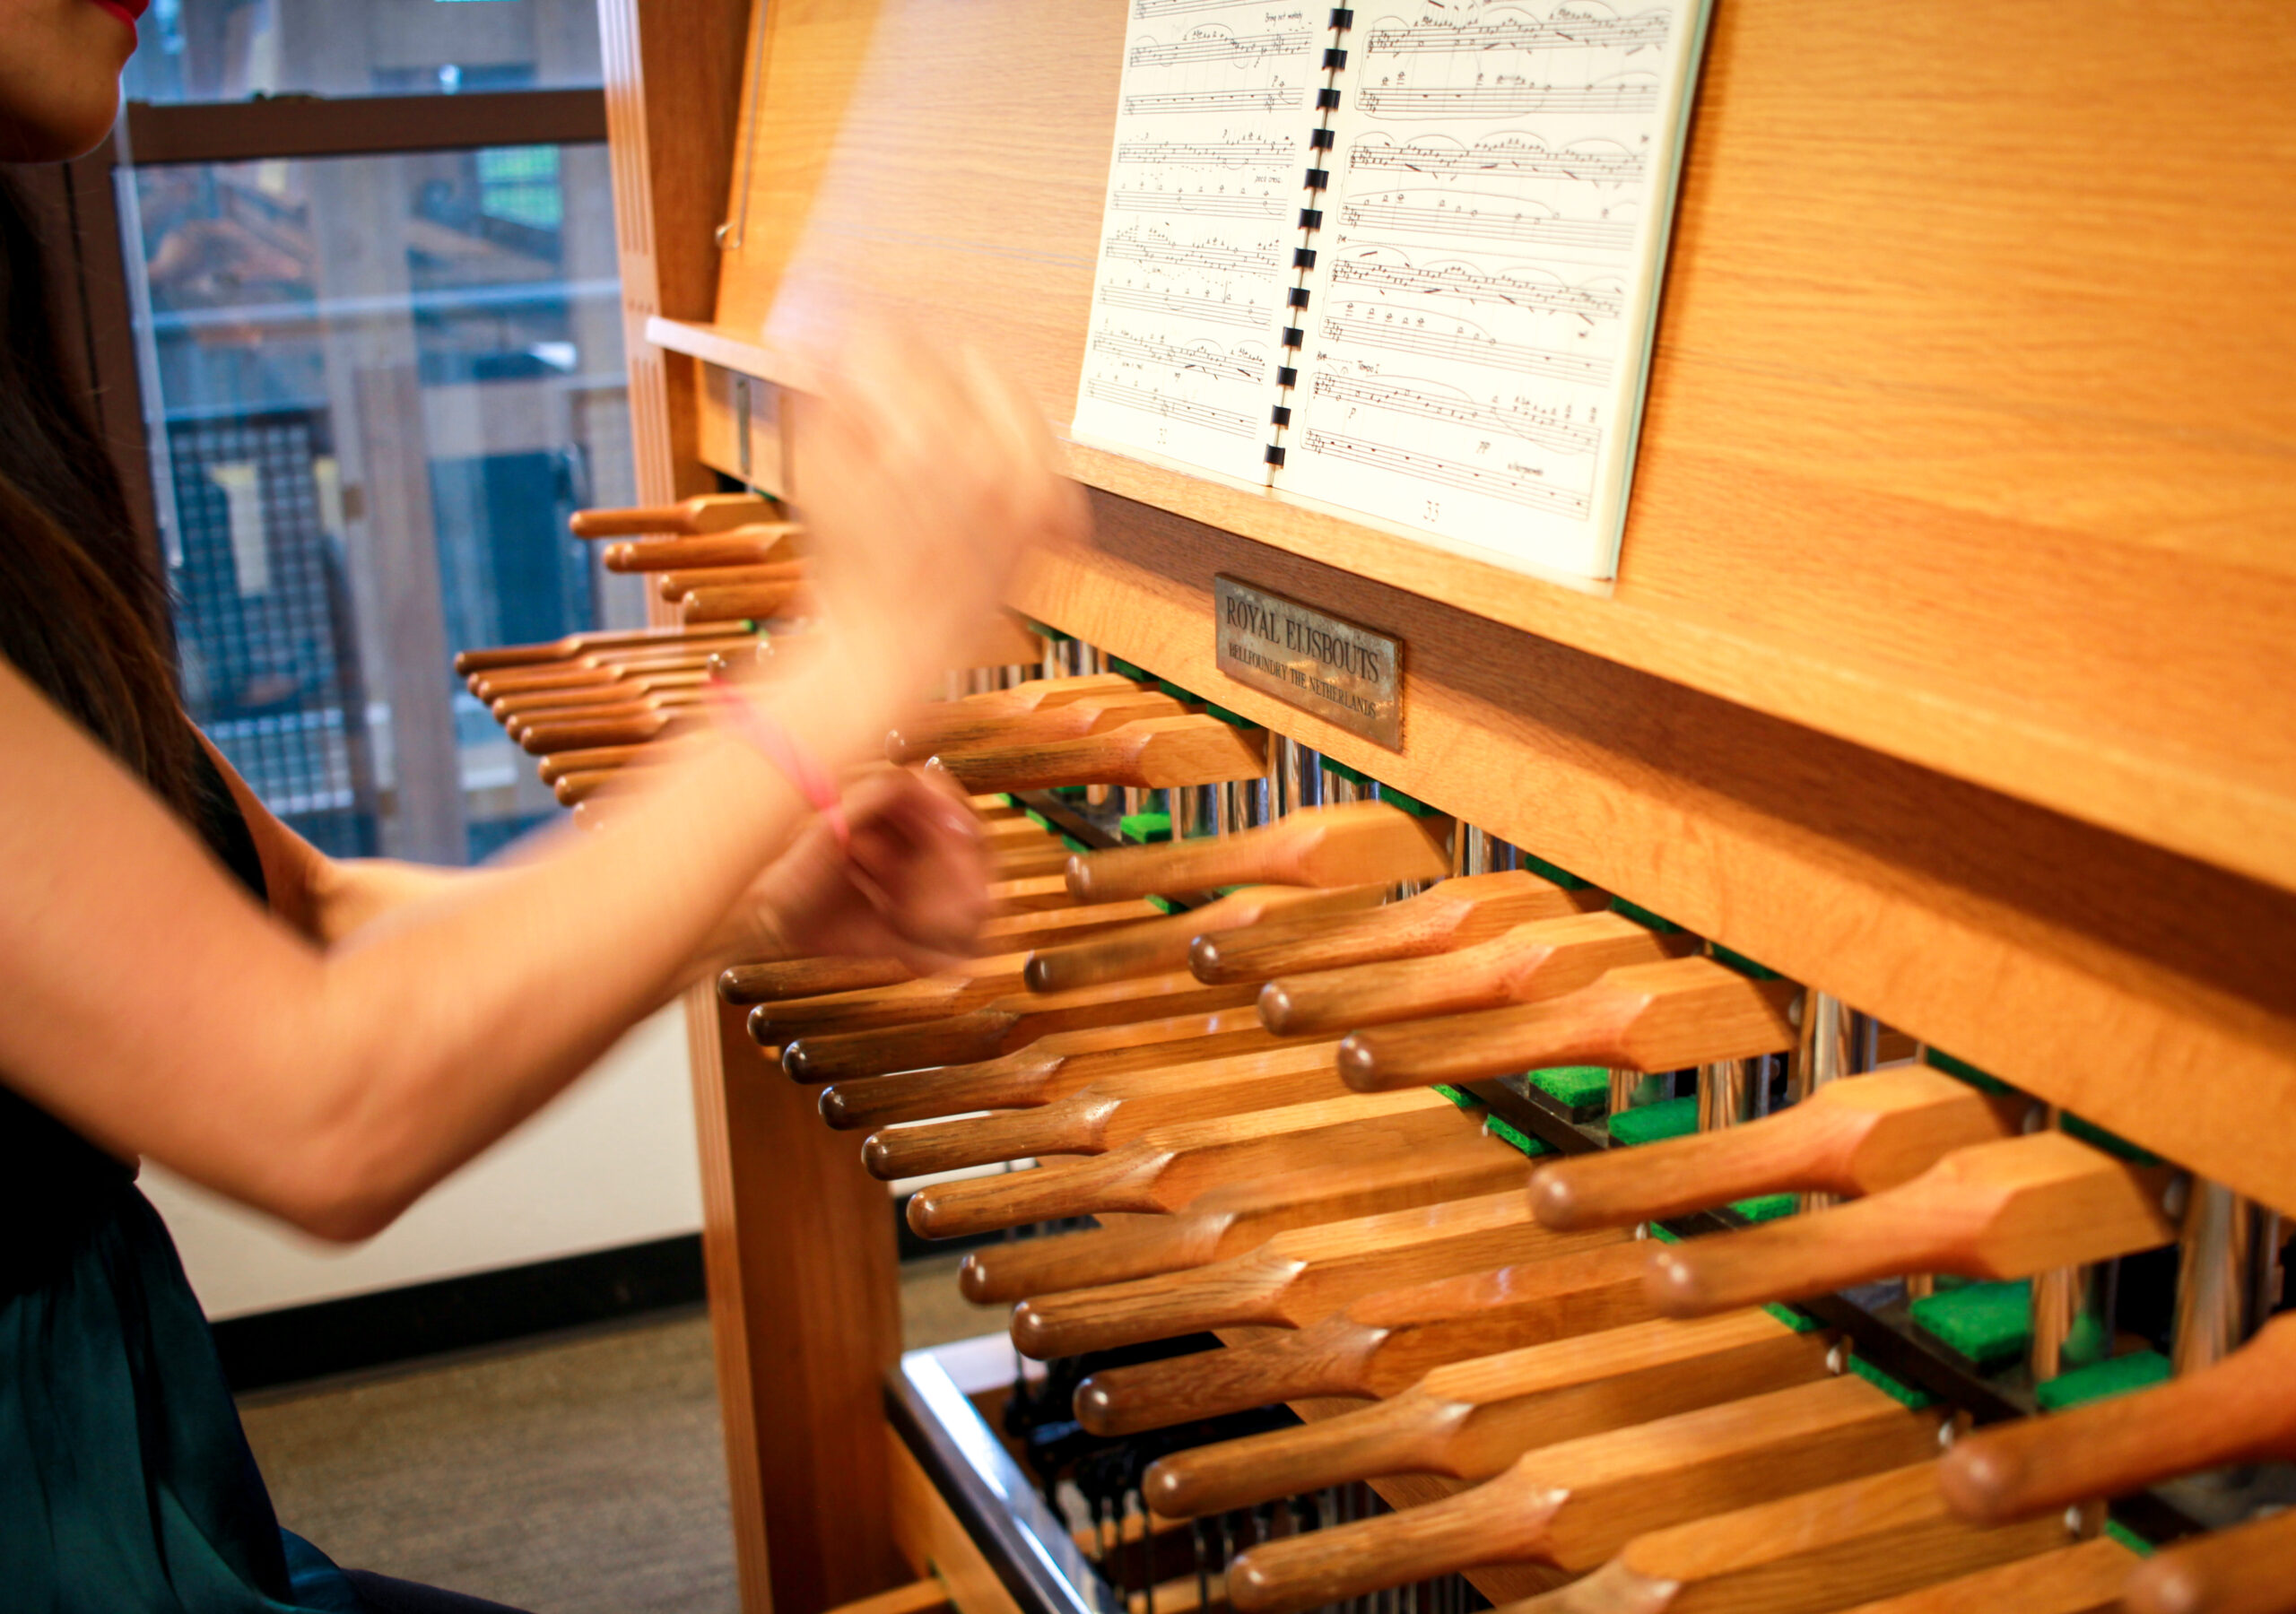 Player at the carillon handles